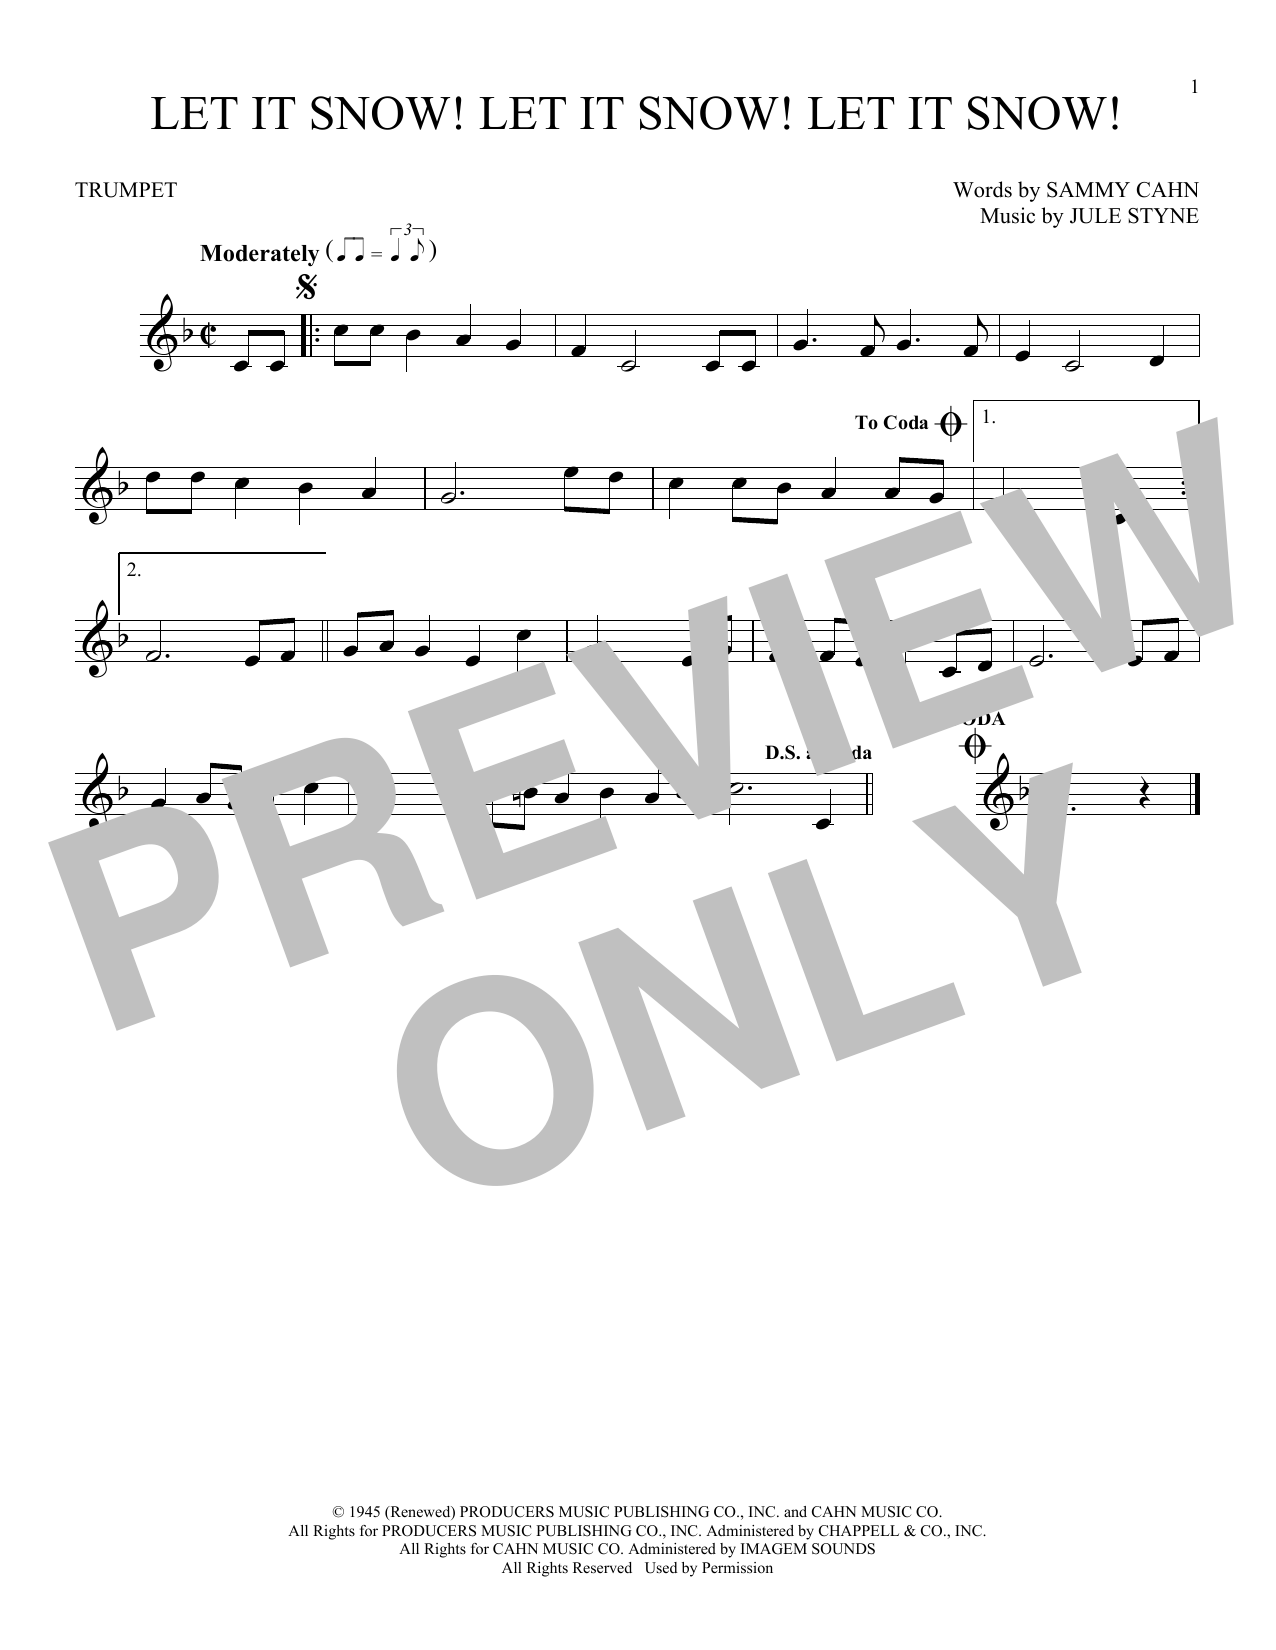 Sammy Cahn & Julie Styne Let It Snow! Let It Snow! Let It Snow! Sheet Music Notes & Chords for Trombone - Download or Print PDF